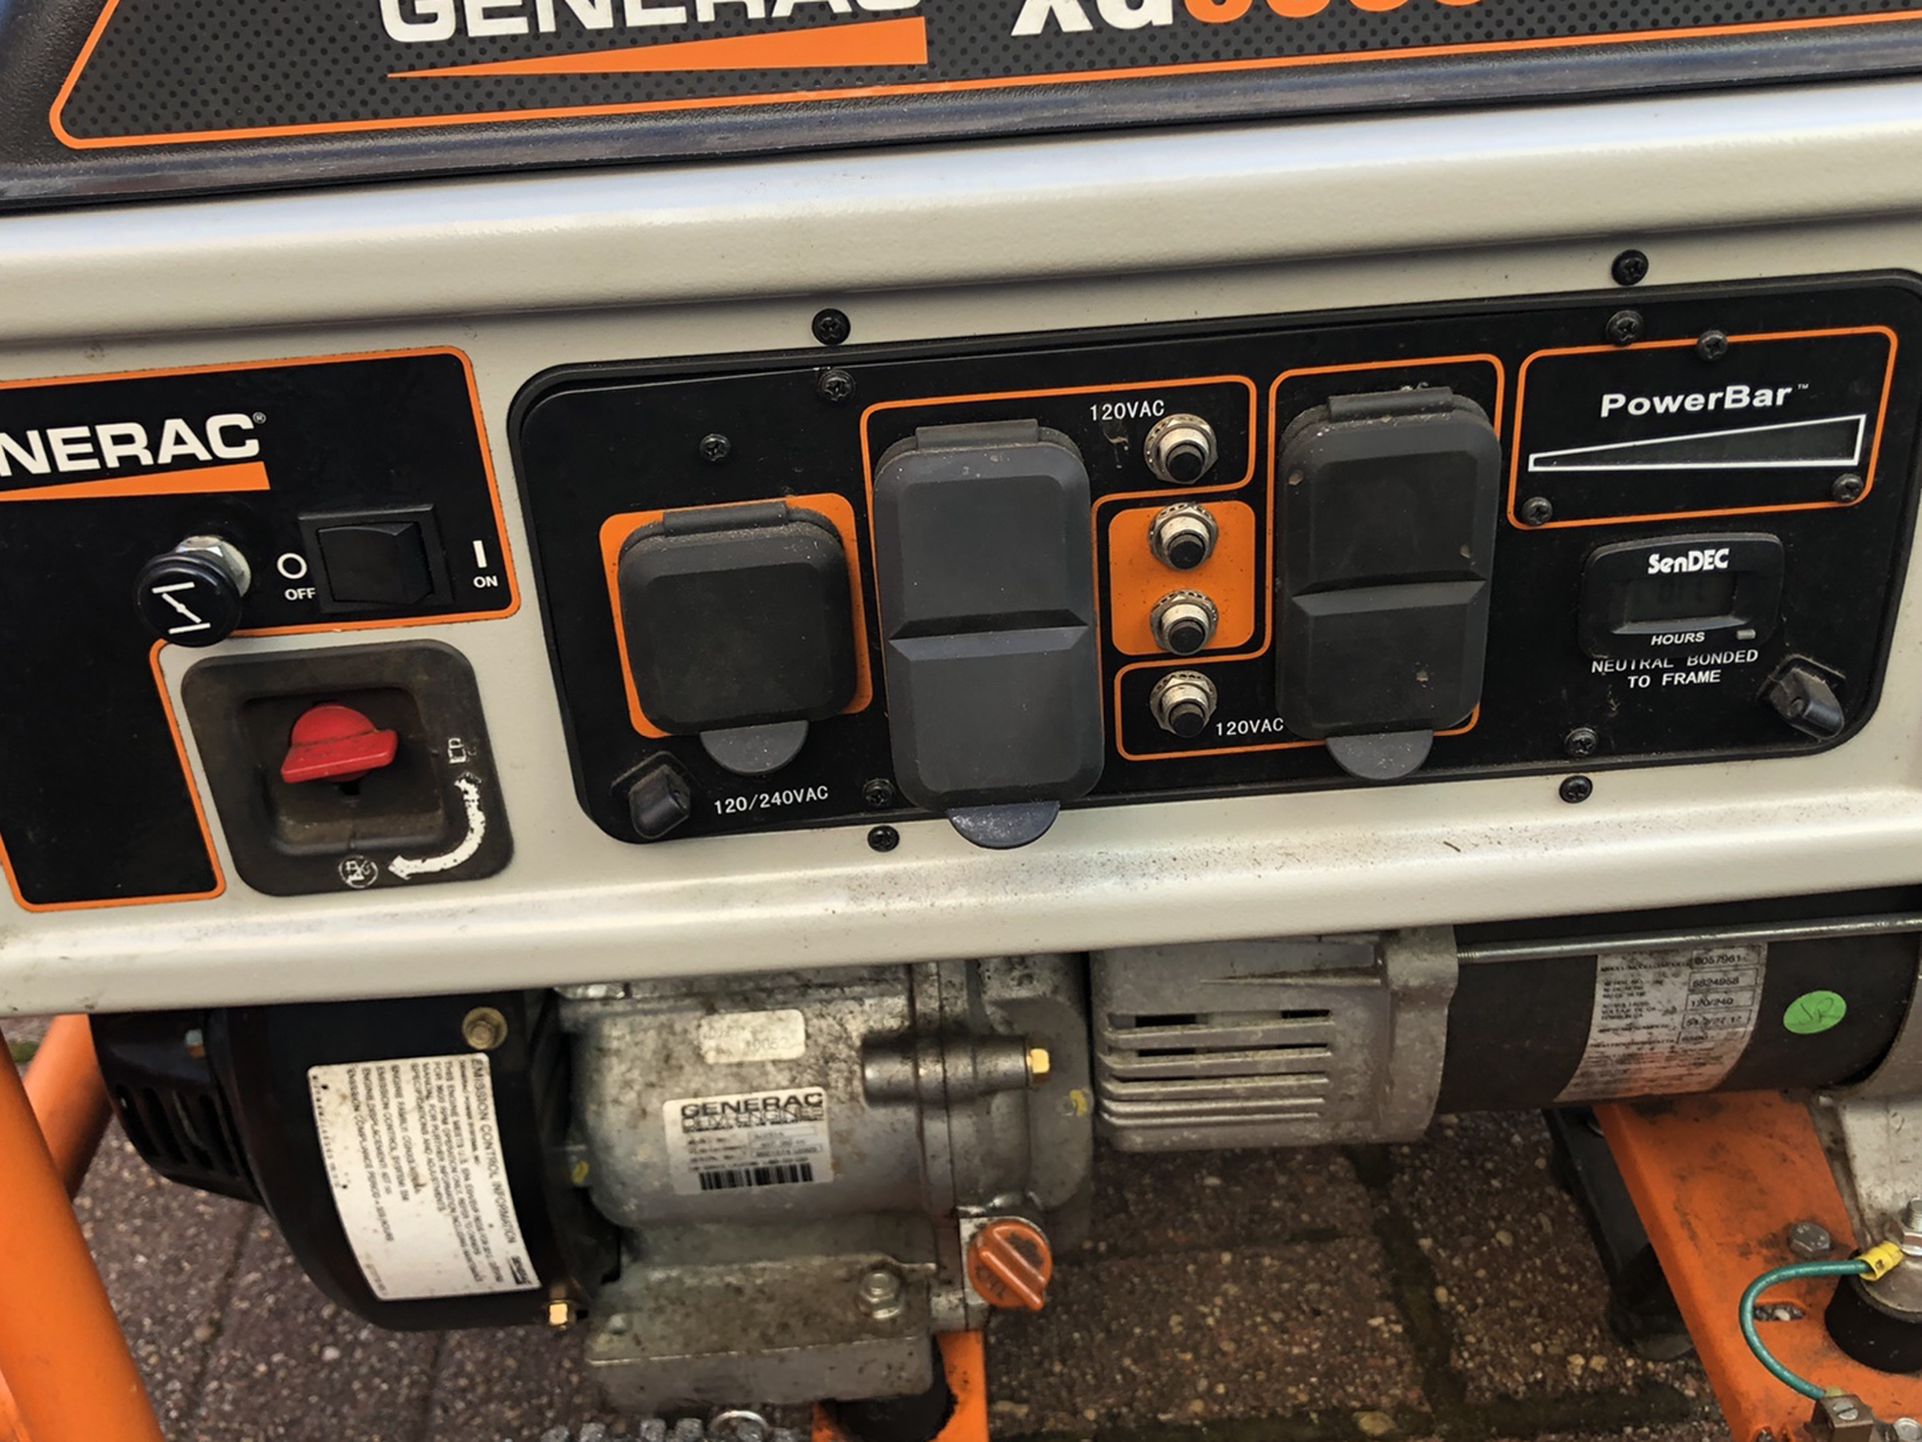 Generac XG6500 generator Serviced